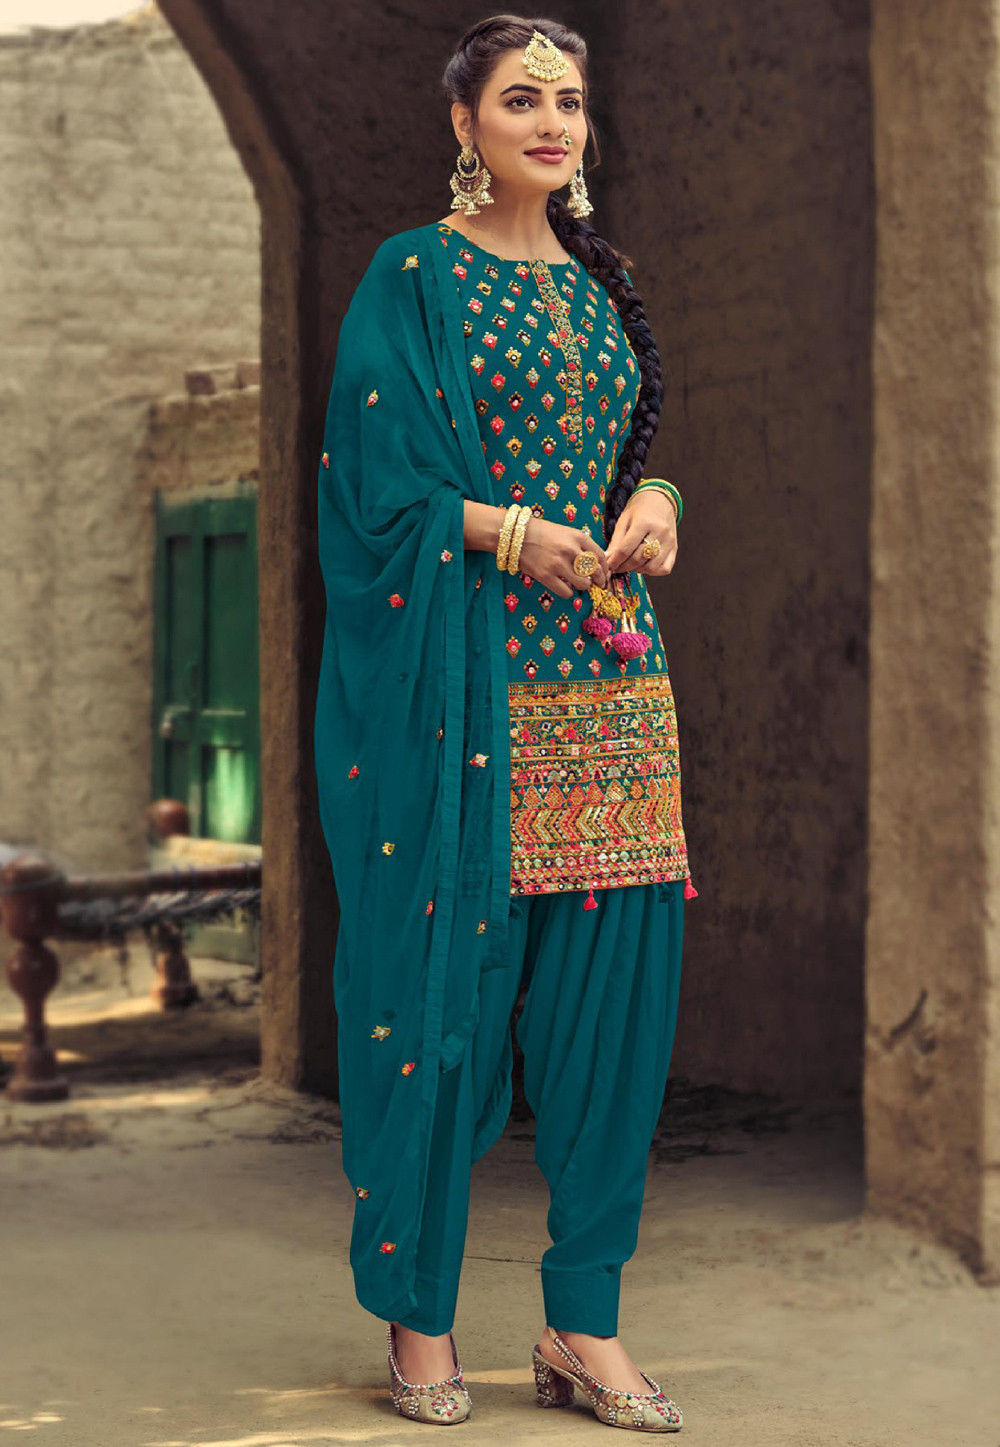 100+ Instagram Hidden Face Girl Pic in Punjabi Suit Collection - shoutoutly-as247.edu.vn